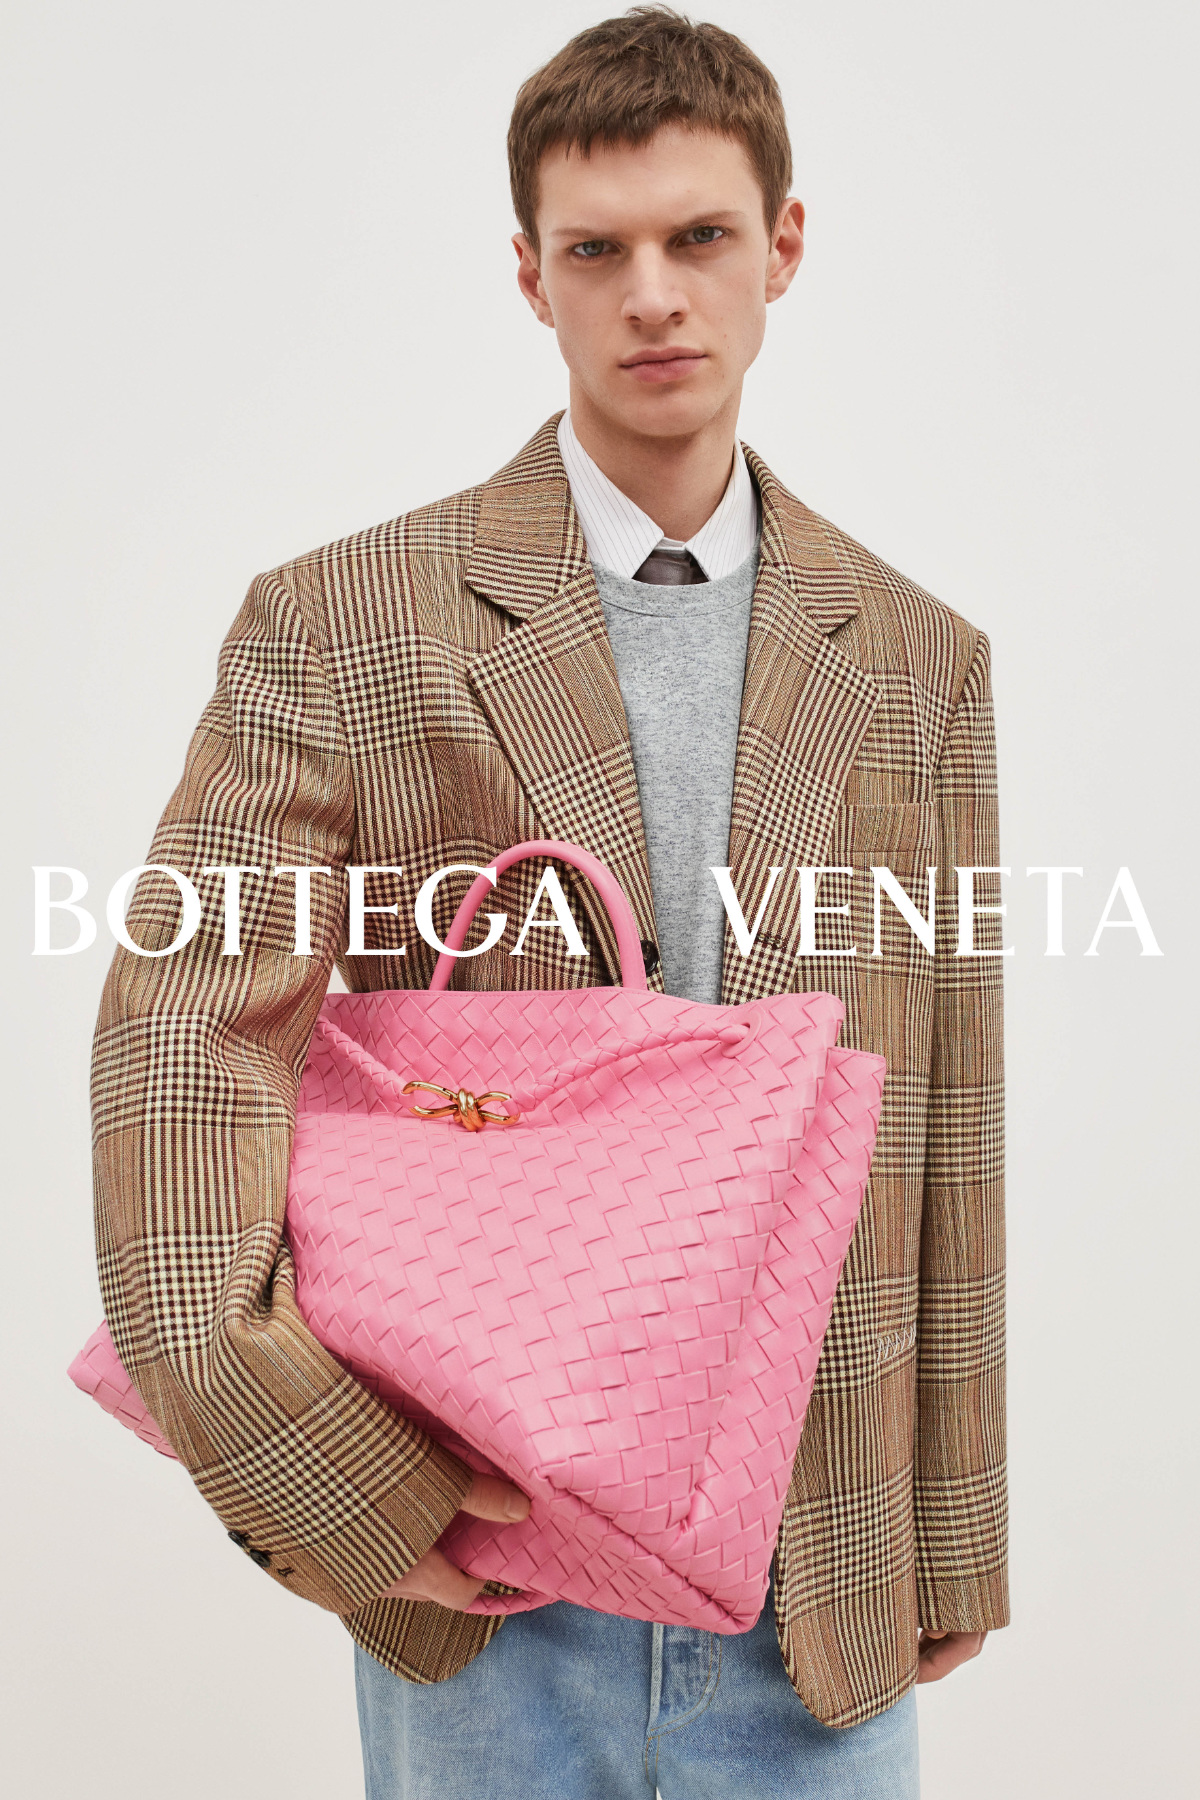 Bottega Veneta's sweatsuits headline its Pre-Spring 2024 lookbook.